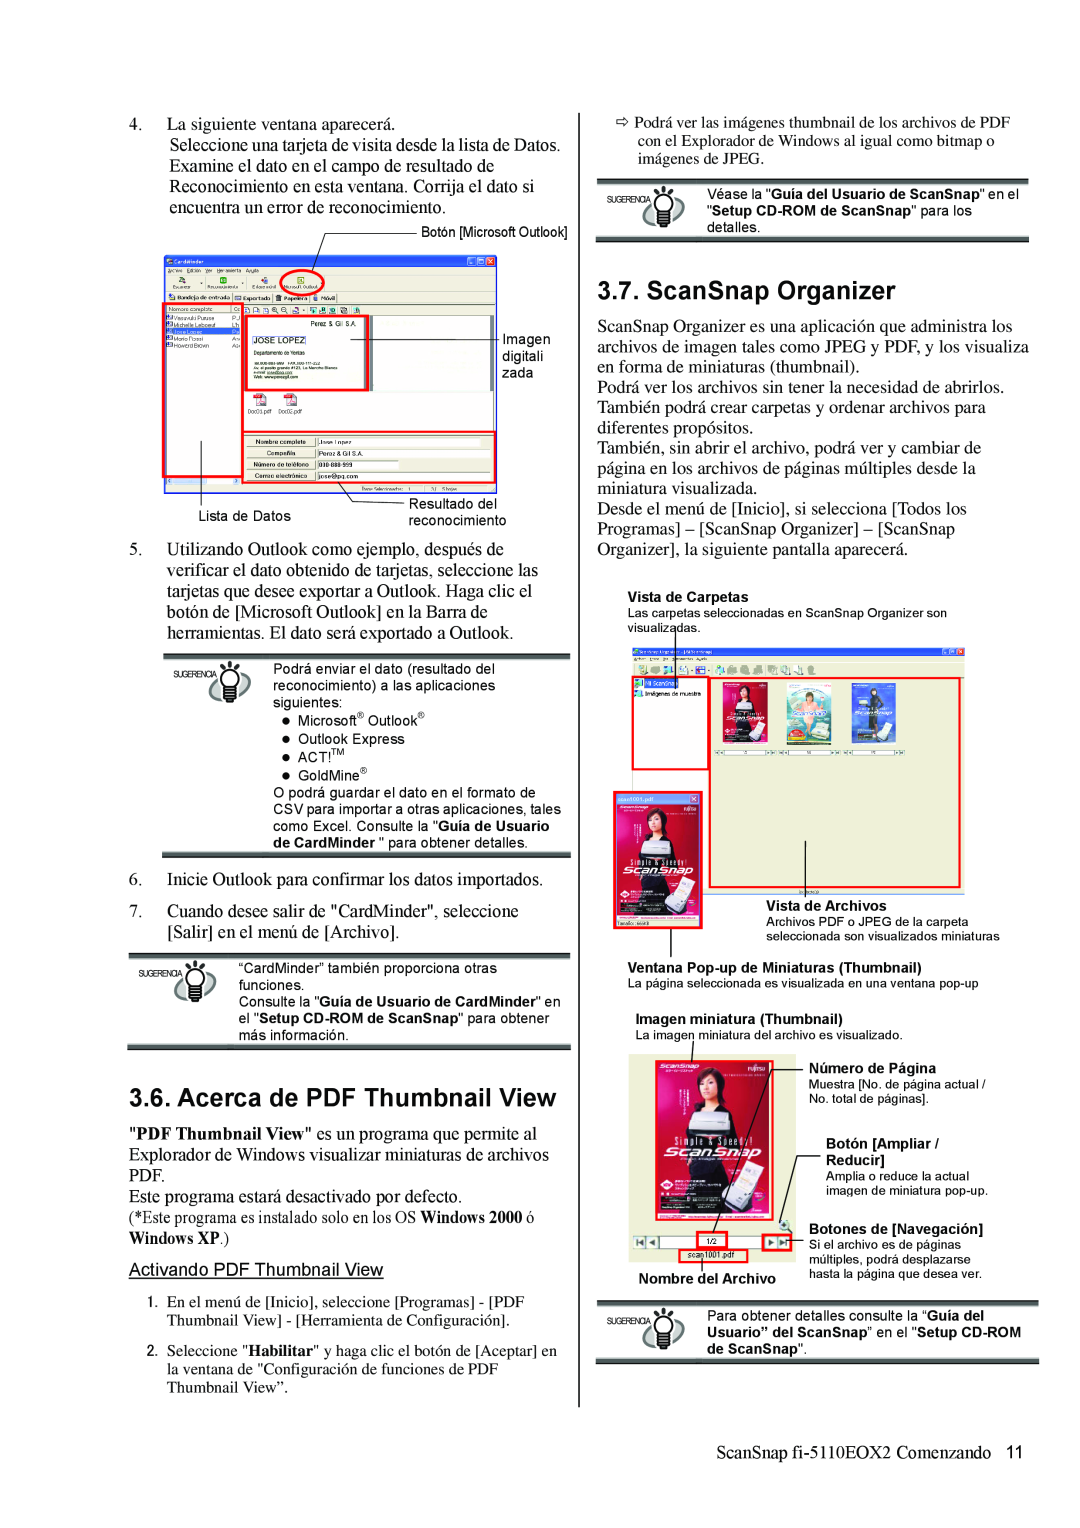 Fujitsu fi-5110EOX2 manual Acerca de PDF Thumbnail View, Activando PDF Thumbnail View, ScanSnap Organizer 